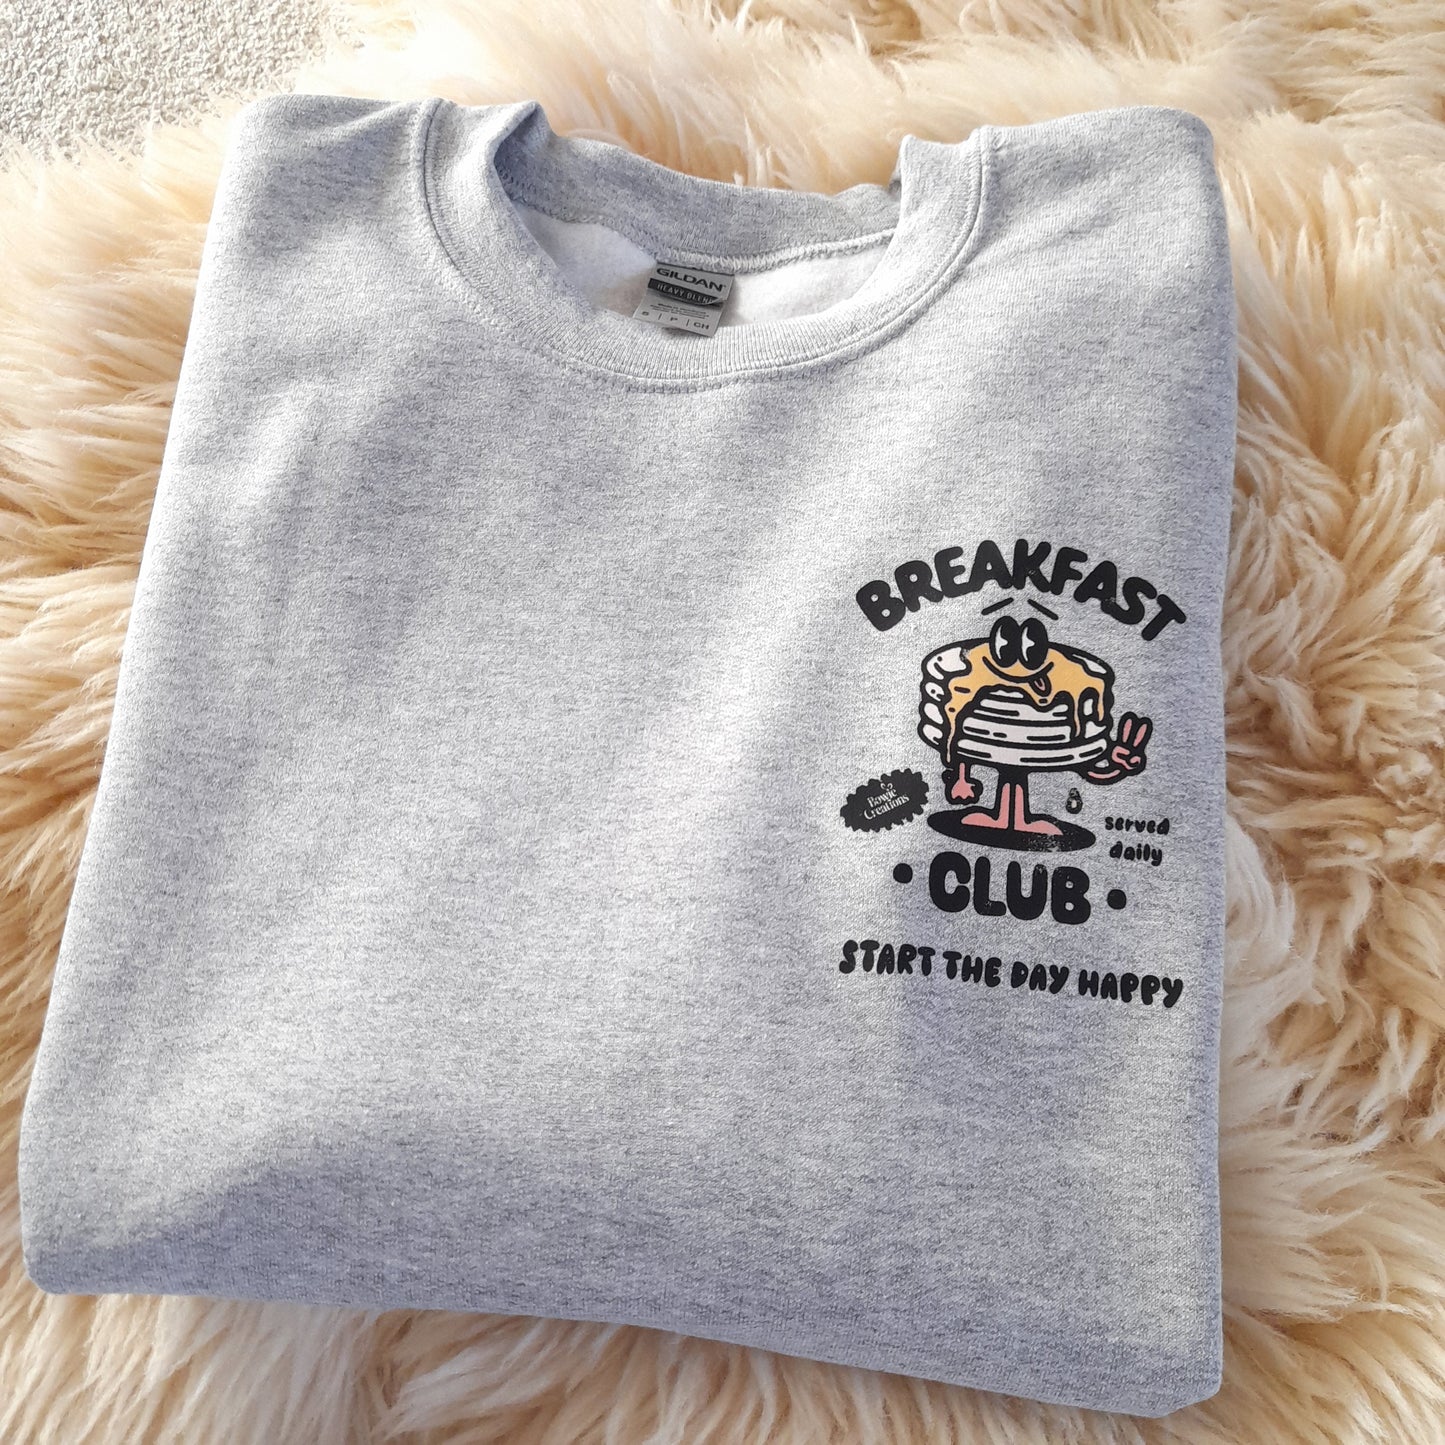 Grey crewneck jumper with retro style print of popular breakfast club pancakes 